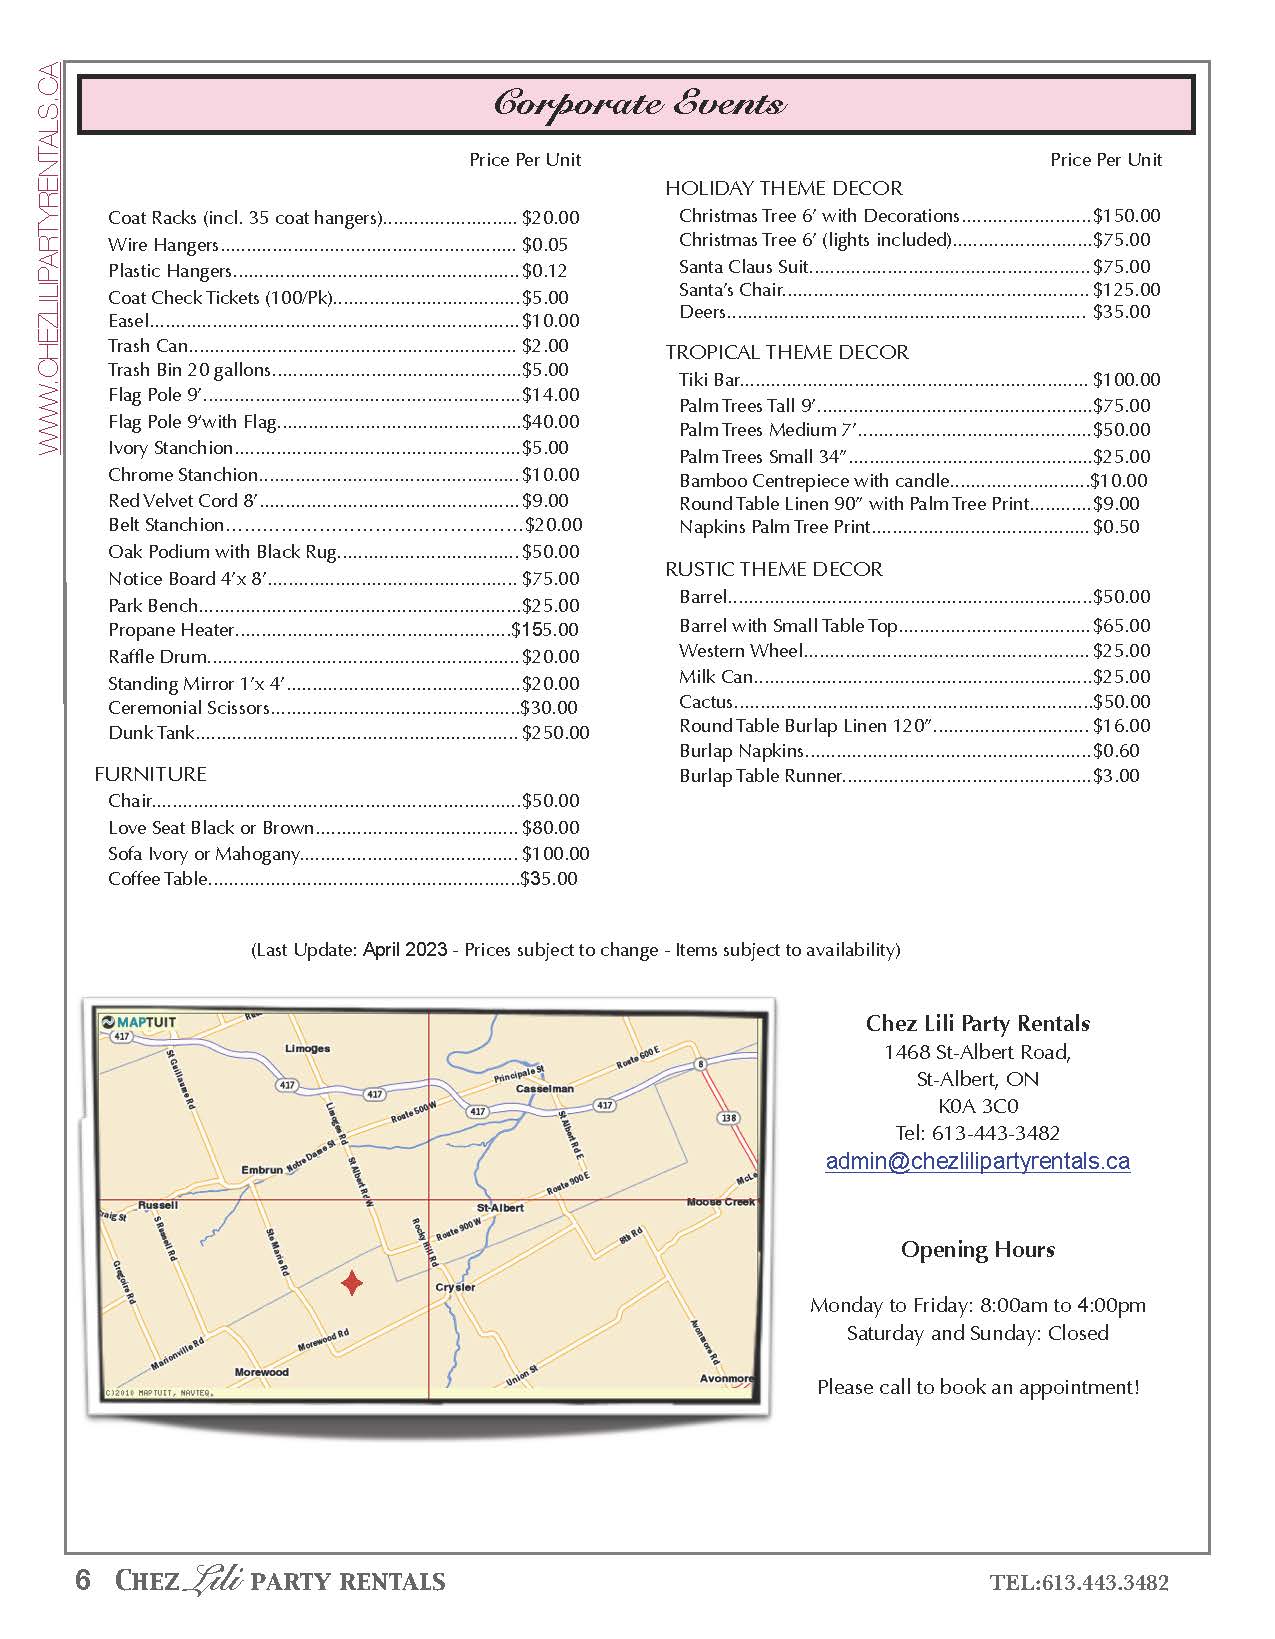 Chez Lili Party Rentals Price List updated Jan 26 2023 Page 6